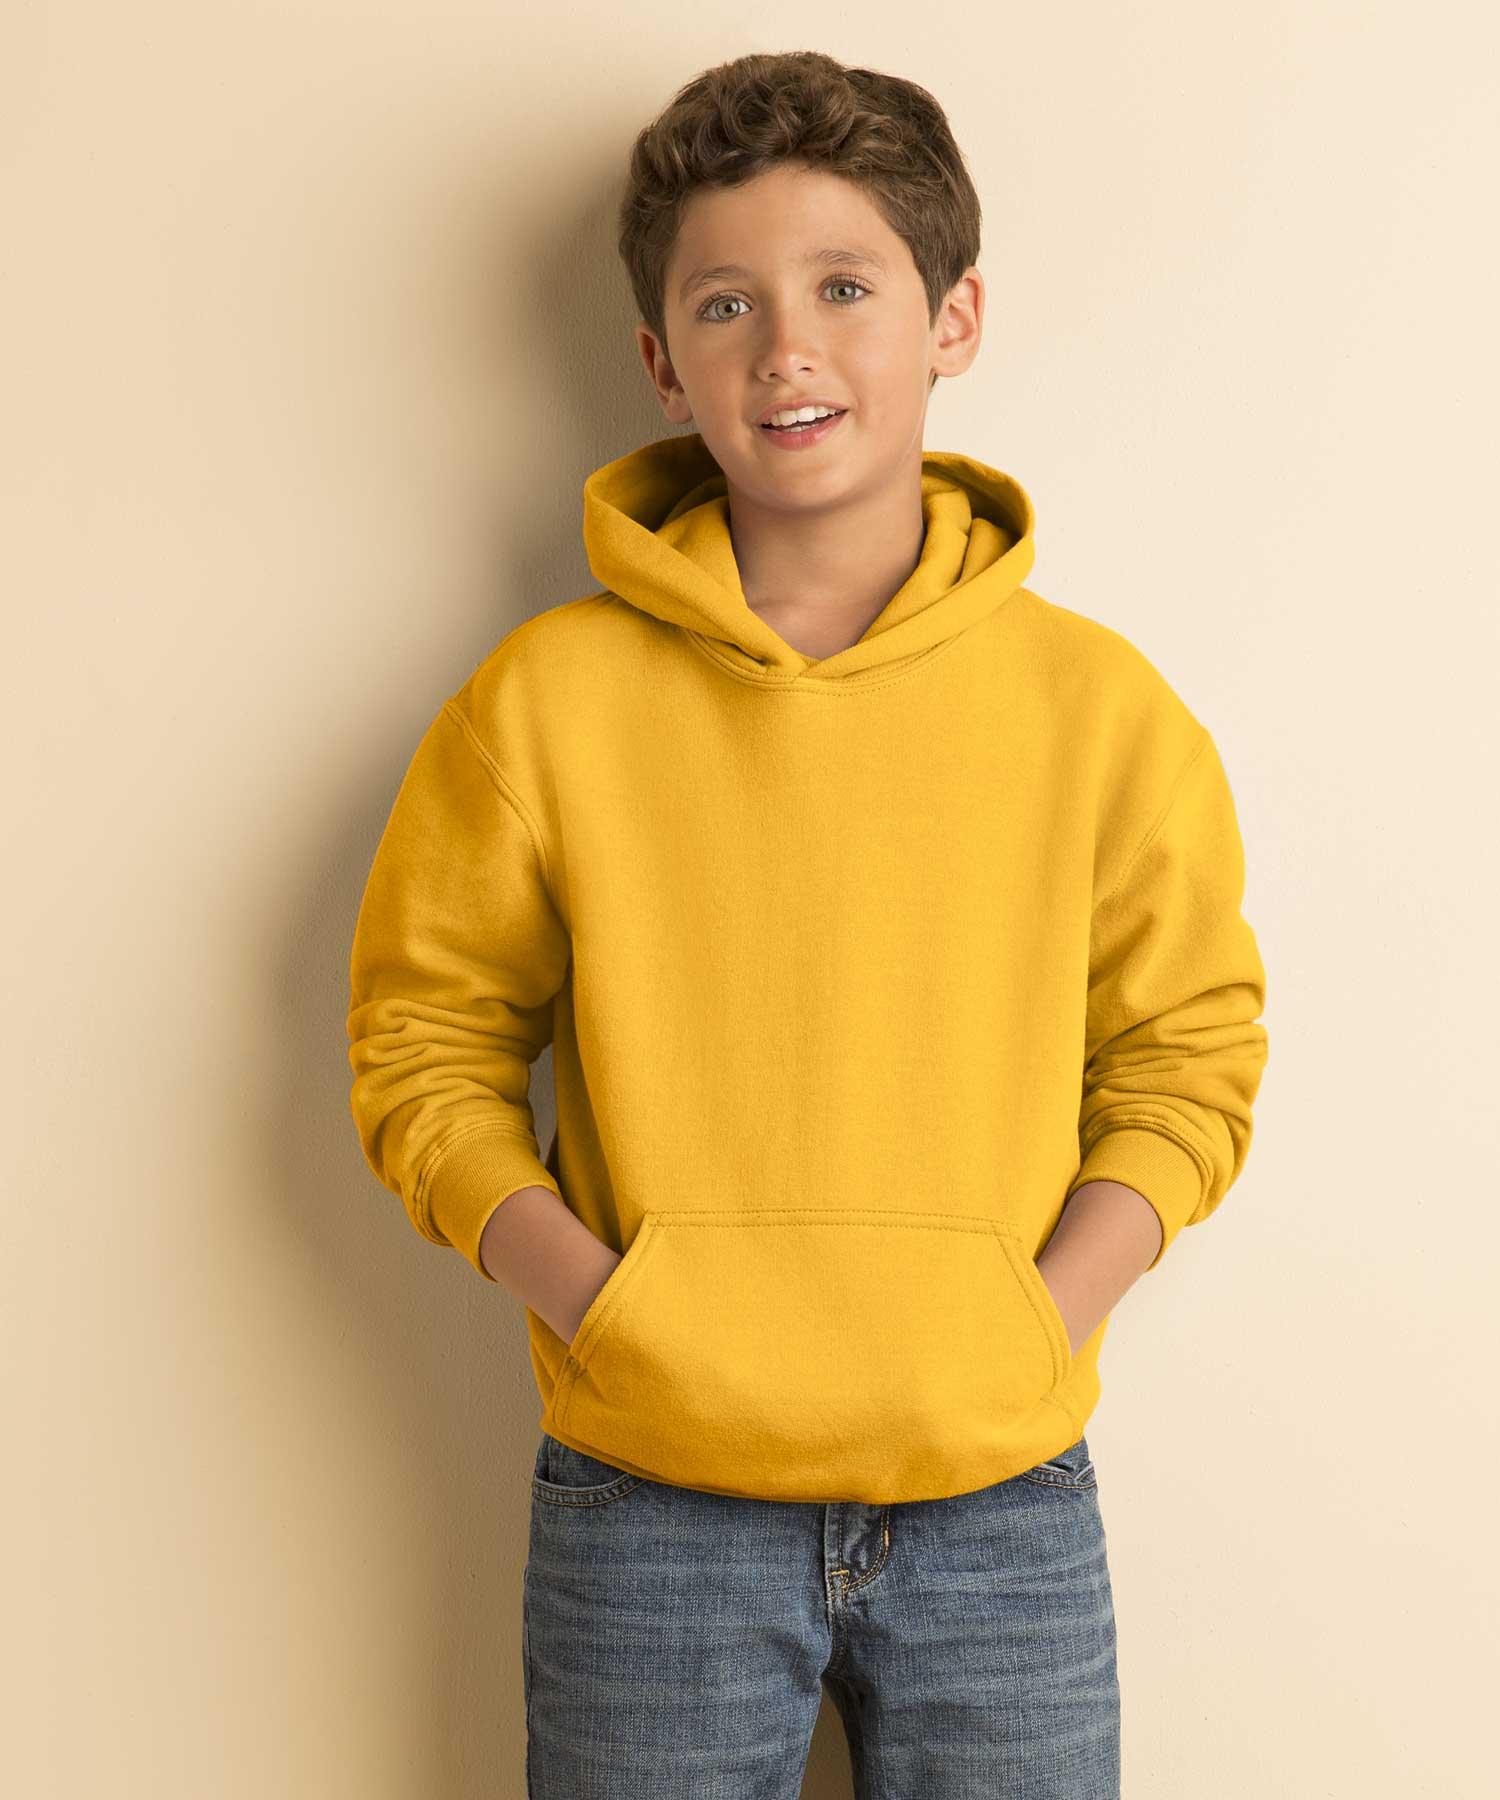 Buy Sweatshirts for kids - Home Kartz